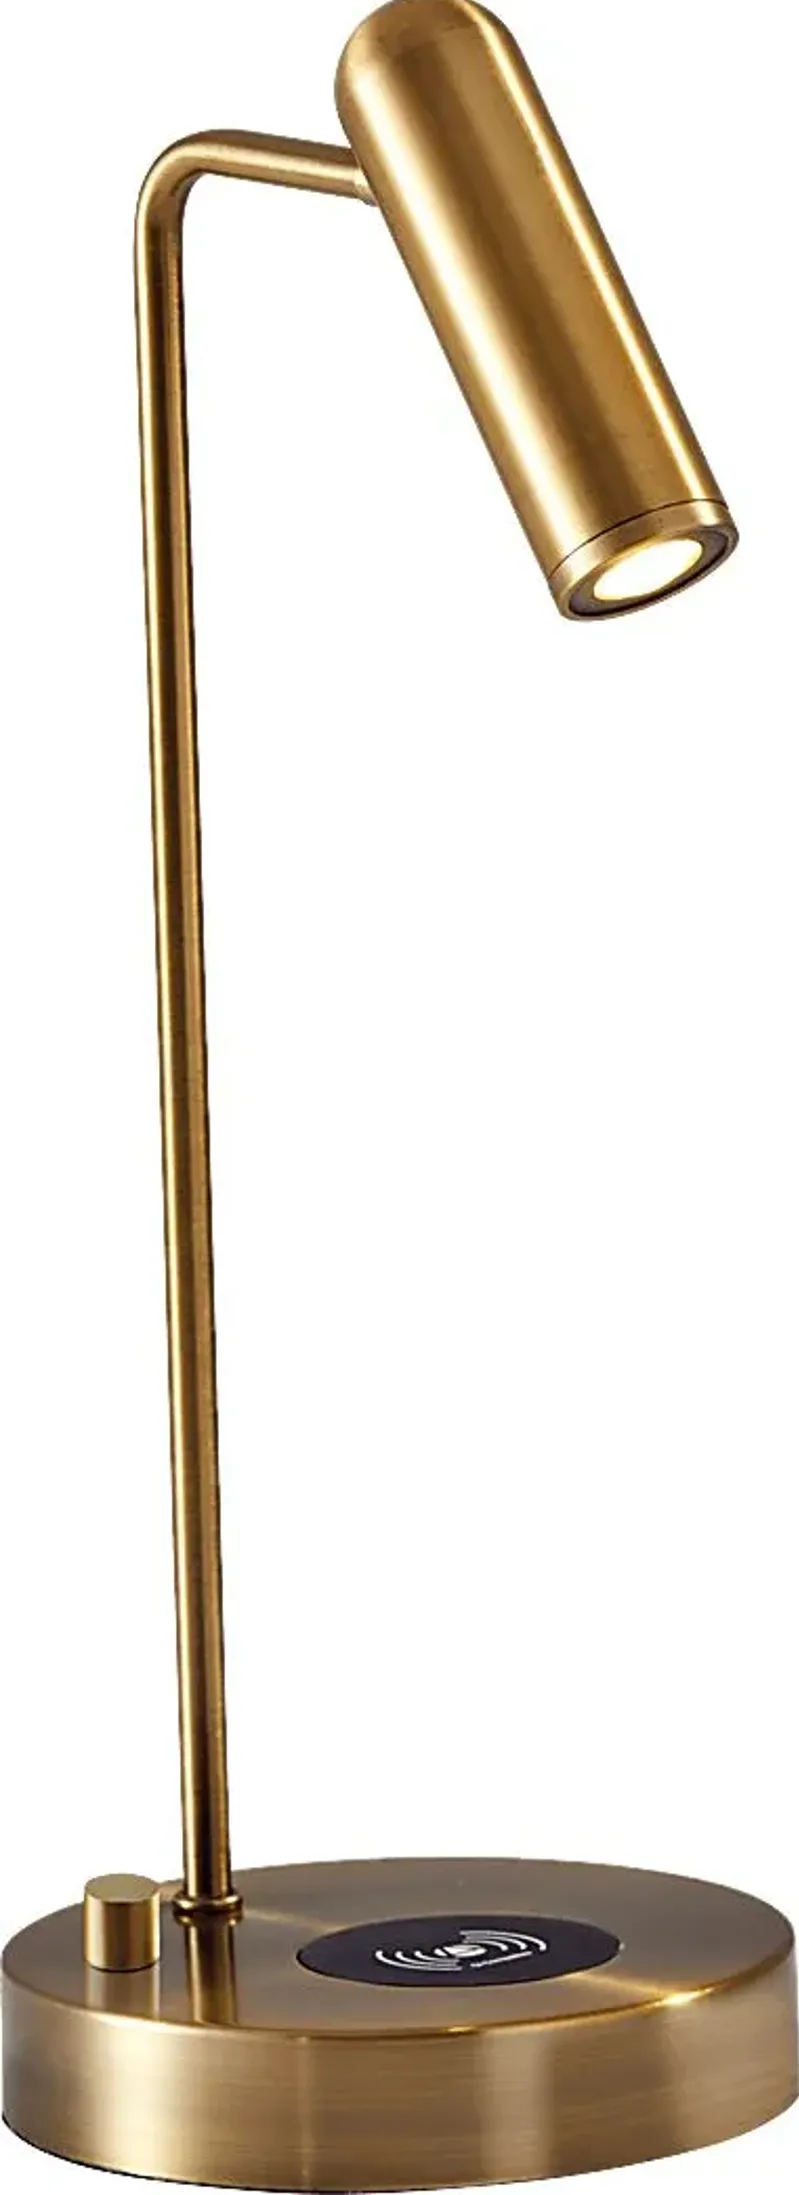 Knokel Brass Table Lamp